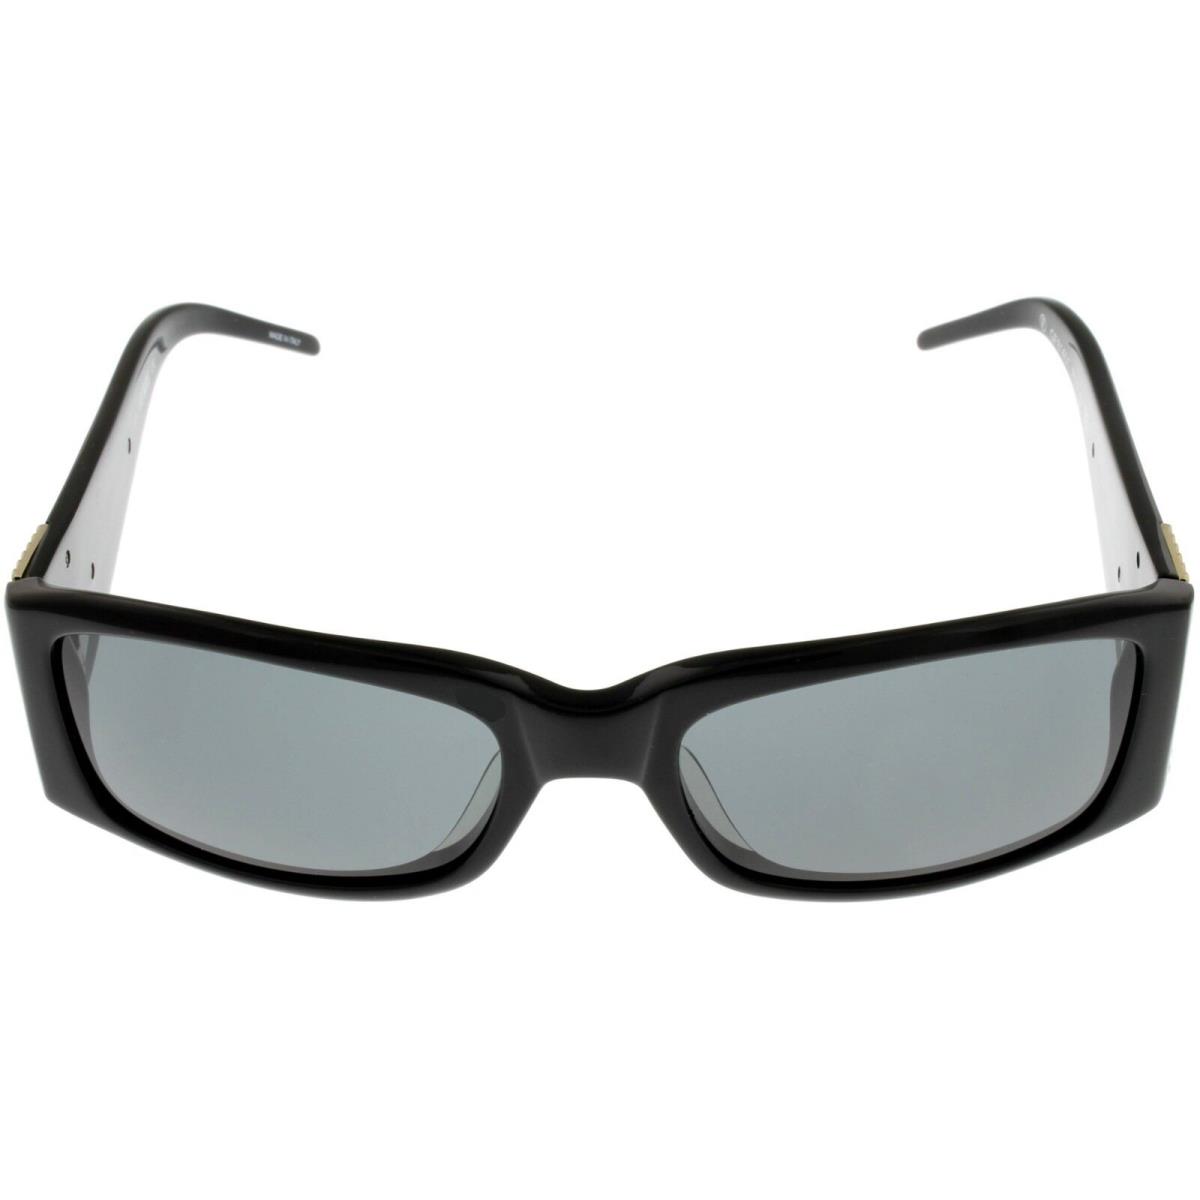 Gianfranco Ferre Sunglasses Women Black Gold Swarovski Rectangular GF814 01